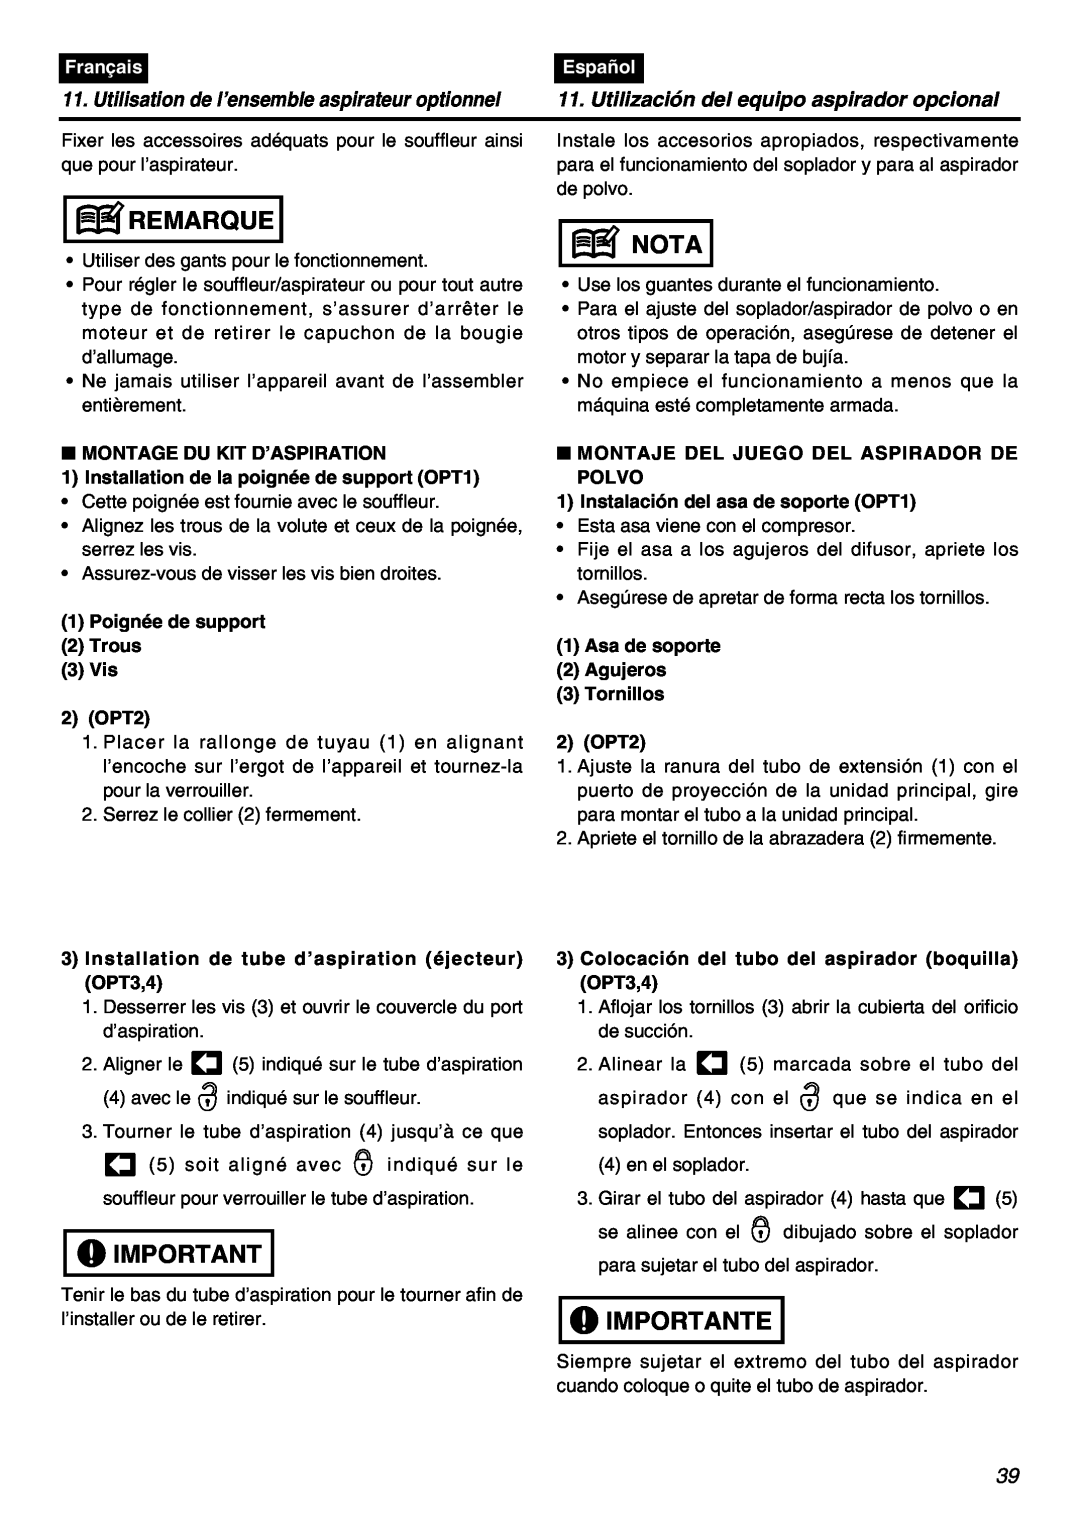 RedMax HBZ2601 manual Remarque, Nota, Importante, Utilización del equipo aspirador opcional, Français, Español, 2 OPT2 